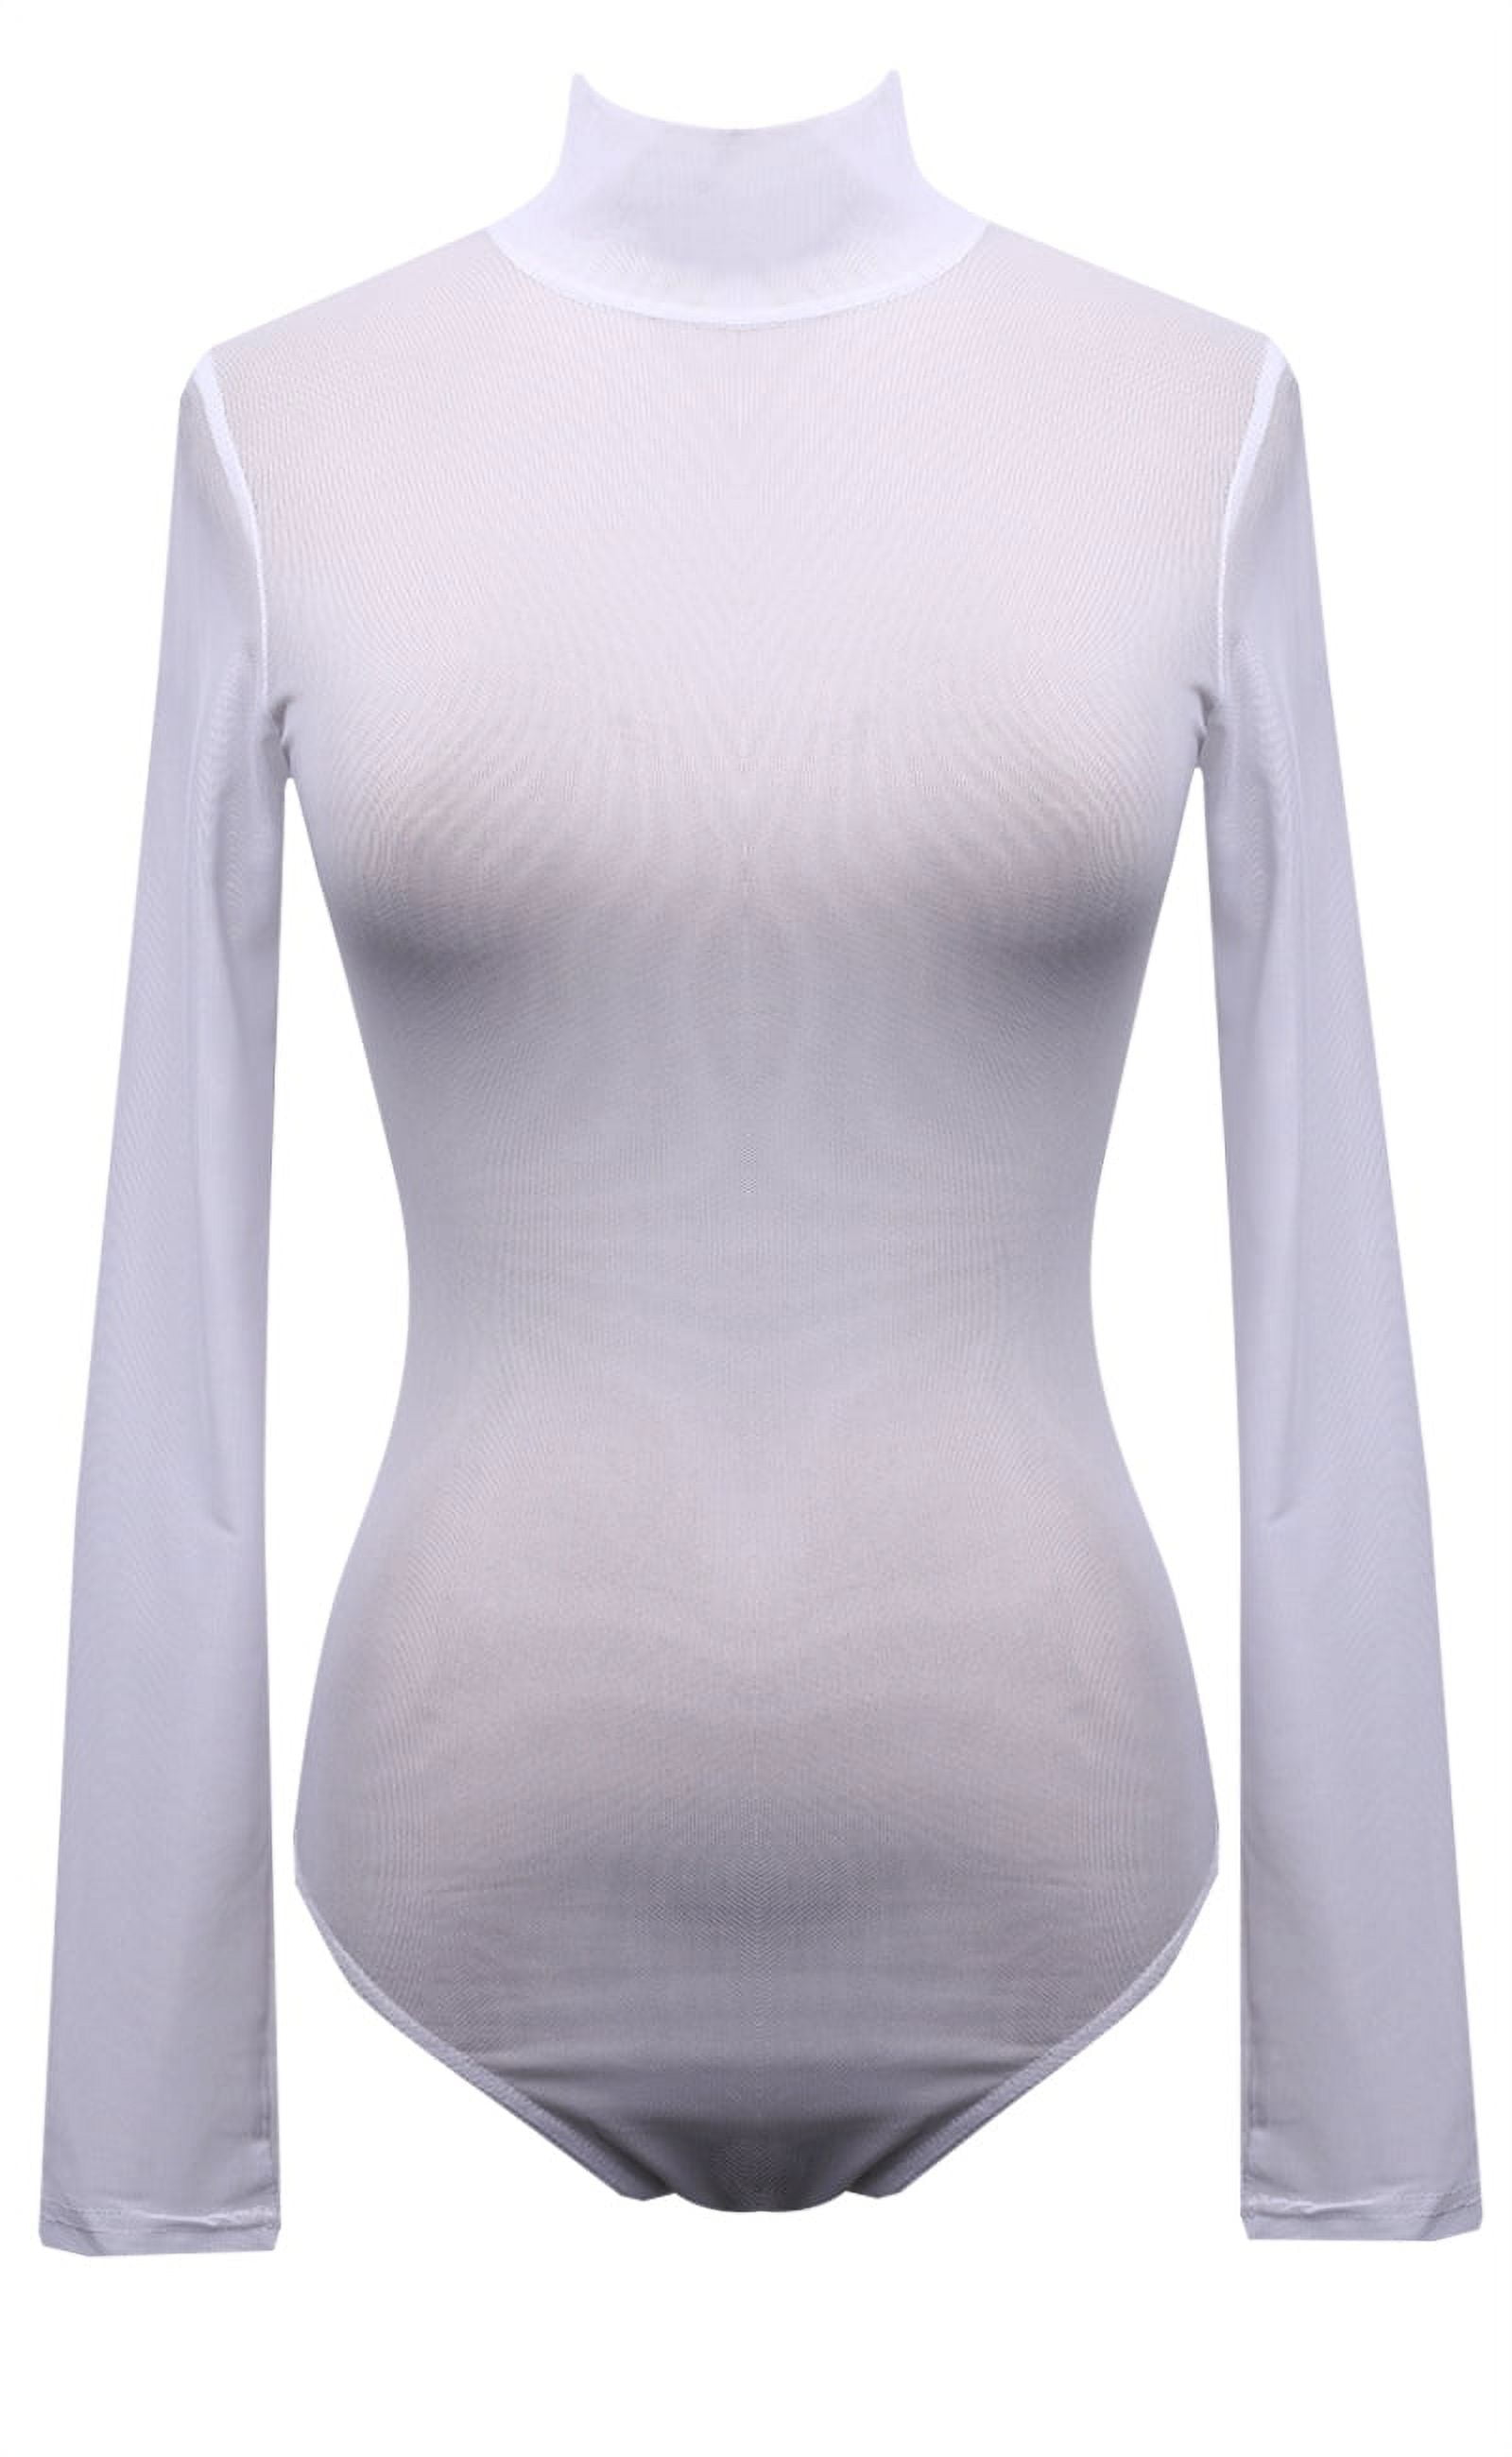 Douhoow Women Transparent Mesh Bodysuit Long Sleeve Jumpsuit One Piece Slim  Sheer Leotard Top